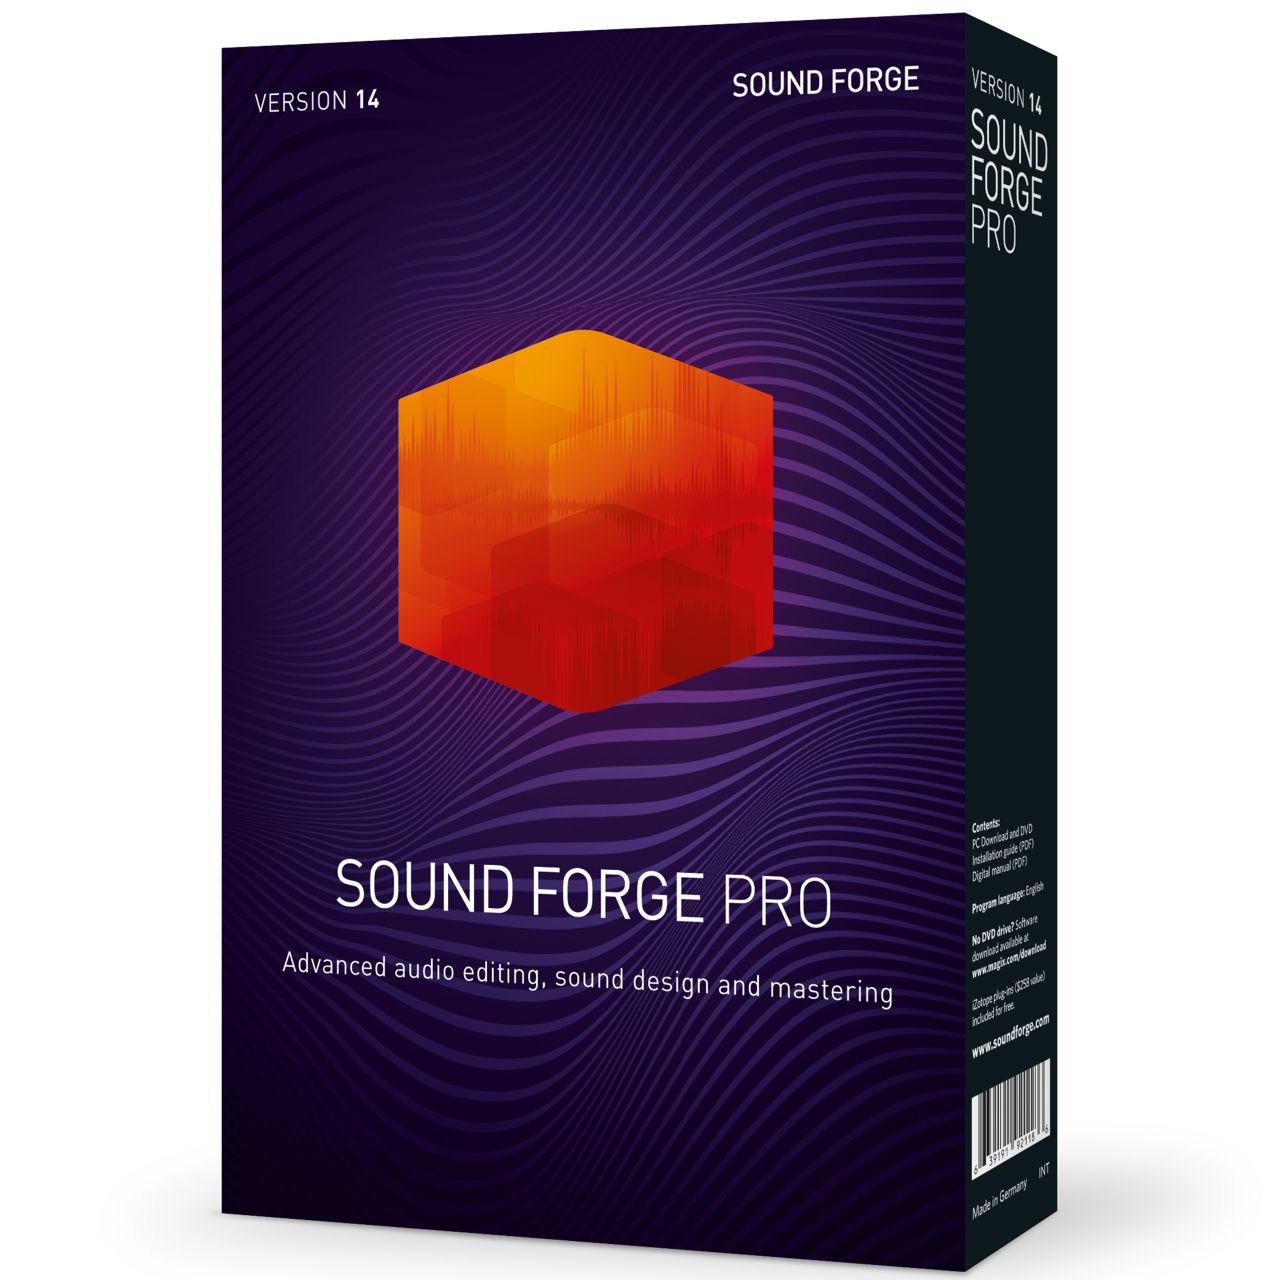 sound forge pro mac 3 torrent